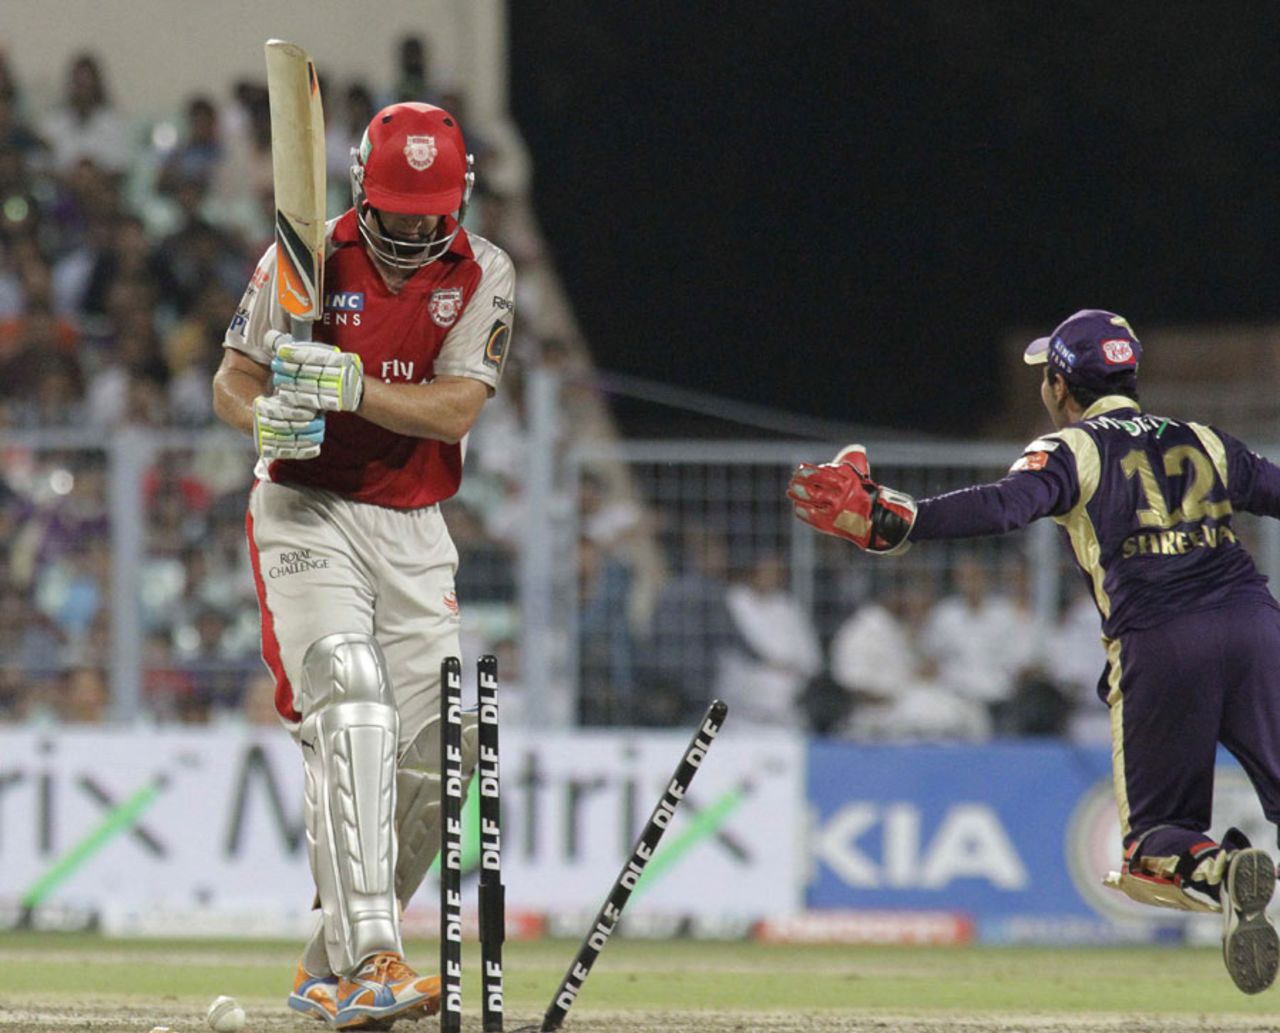 Adam Gilchrist is bowled for 26, Kolkata Knight Riders v Kings XI Punjab, IPL 2011, Kolkata, April 30, 2011 